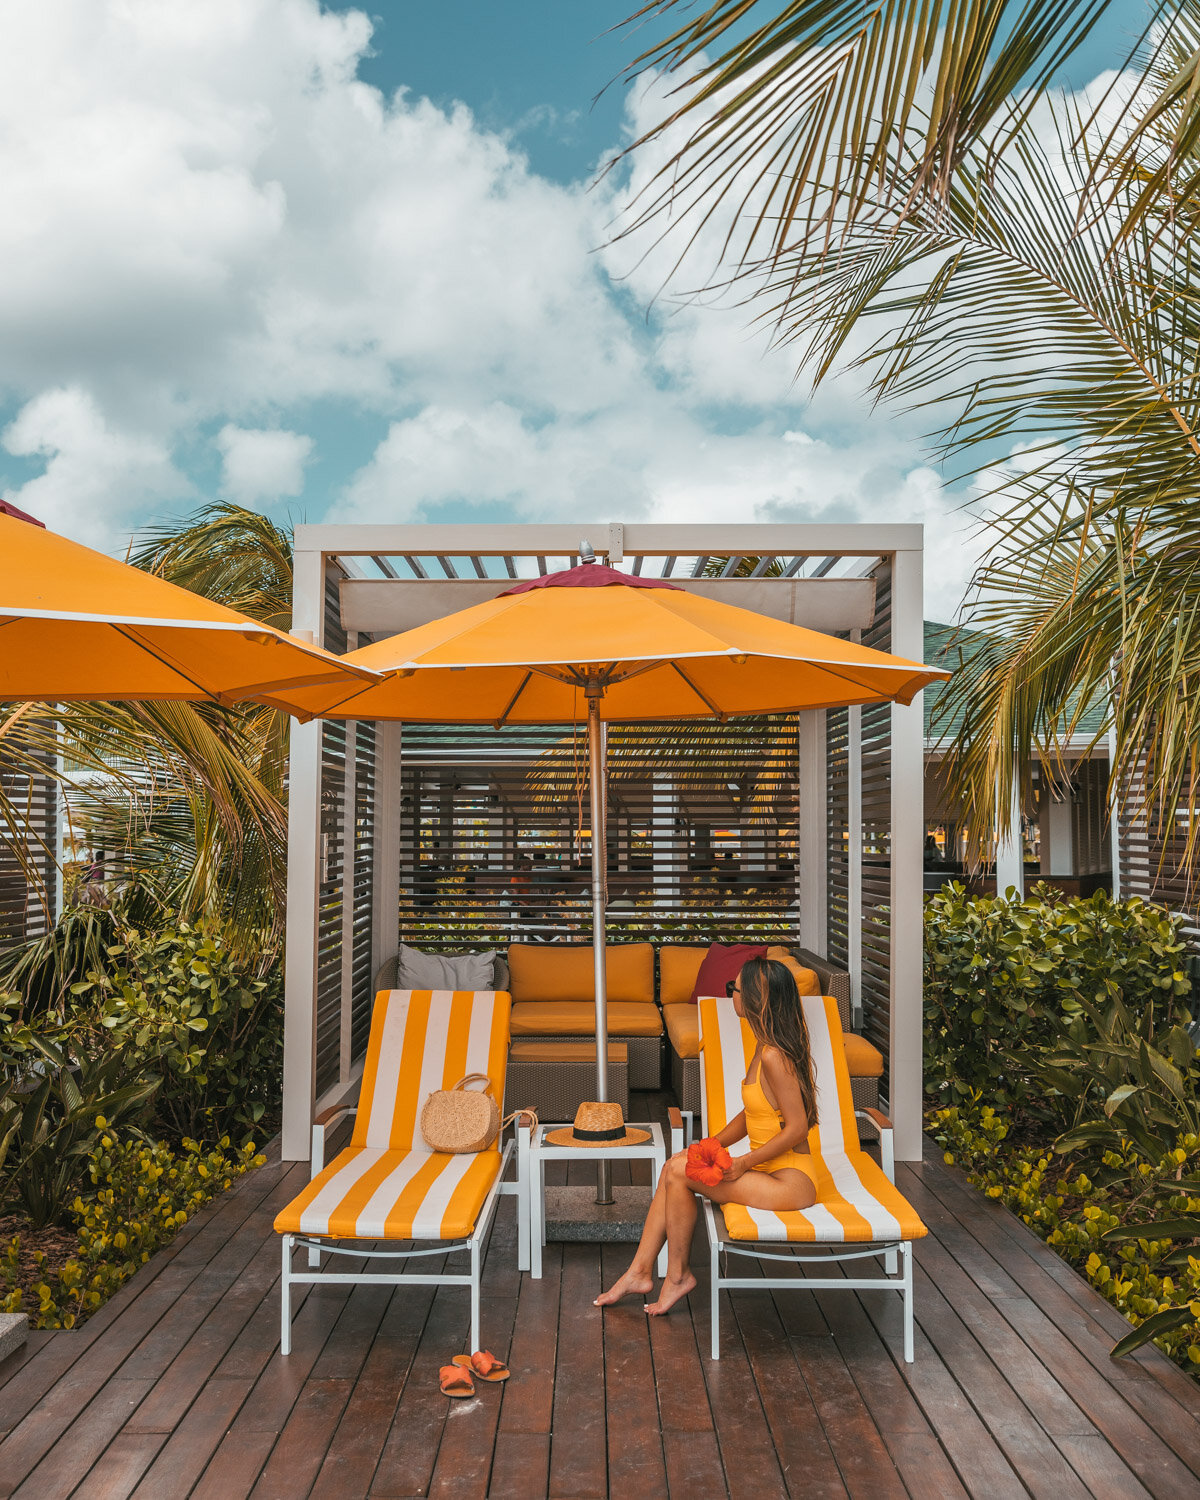 Limin Pool cabanas at Four Seasons Resort Nevis | Caribbean Travel | Luxury Hotels | West Indies | #beaches #paradise #island